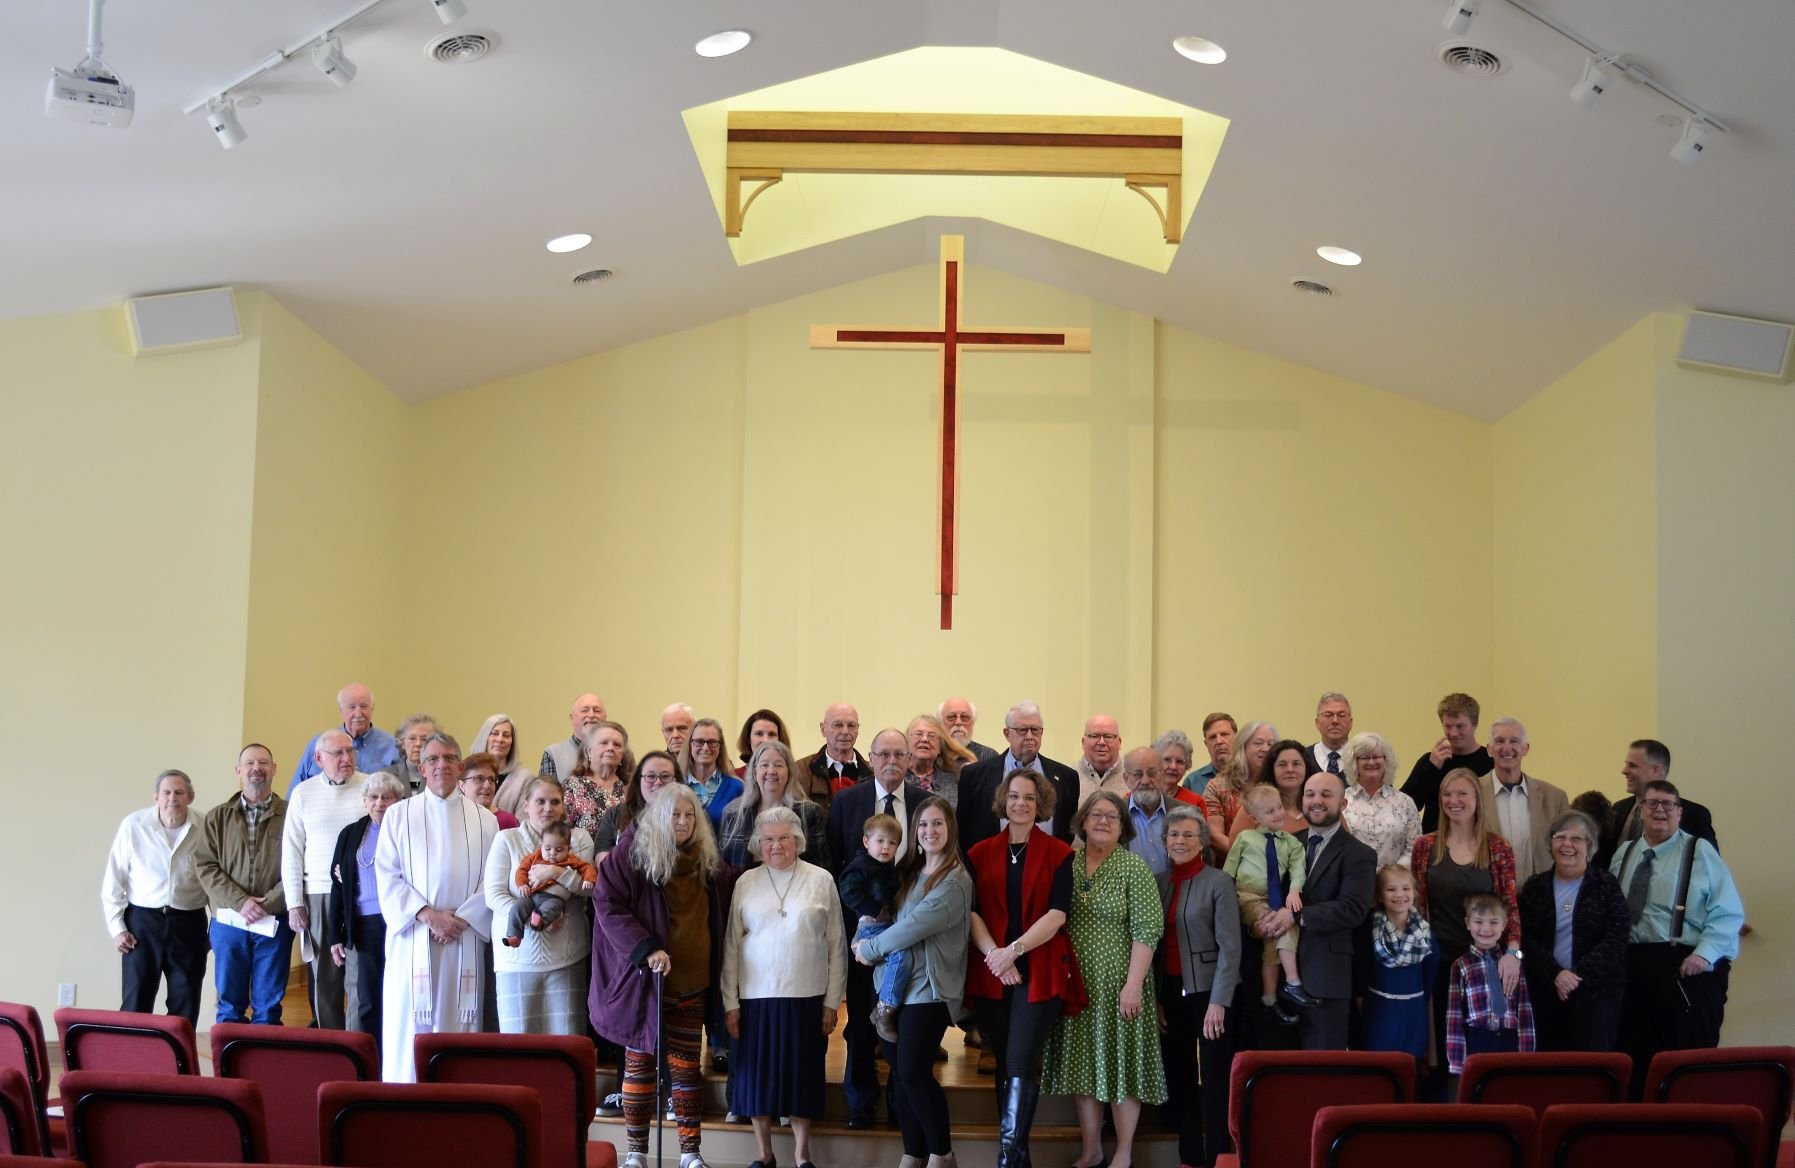 Our-Savior-Lutheran-Church_Roanoke-VA_Photo01.jpg